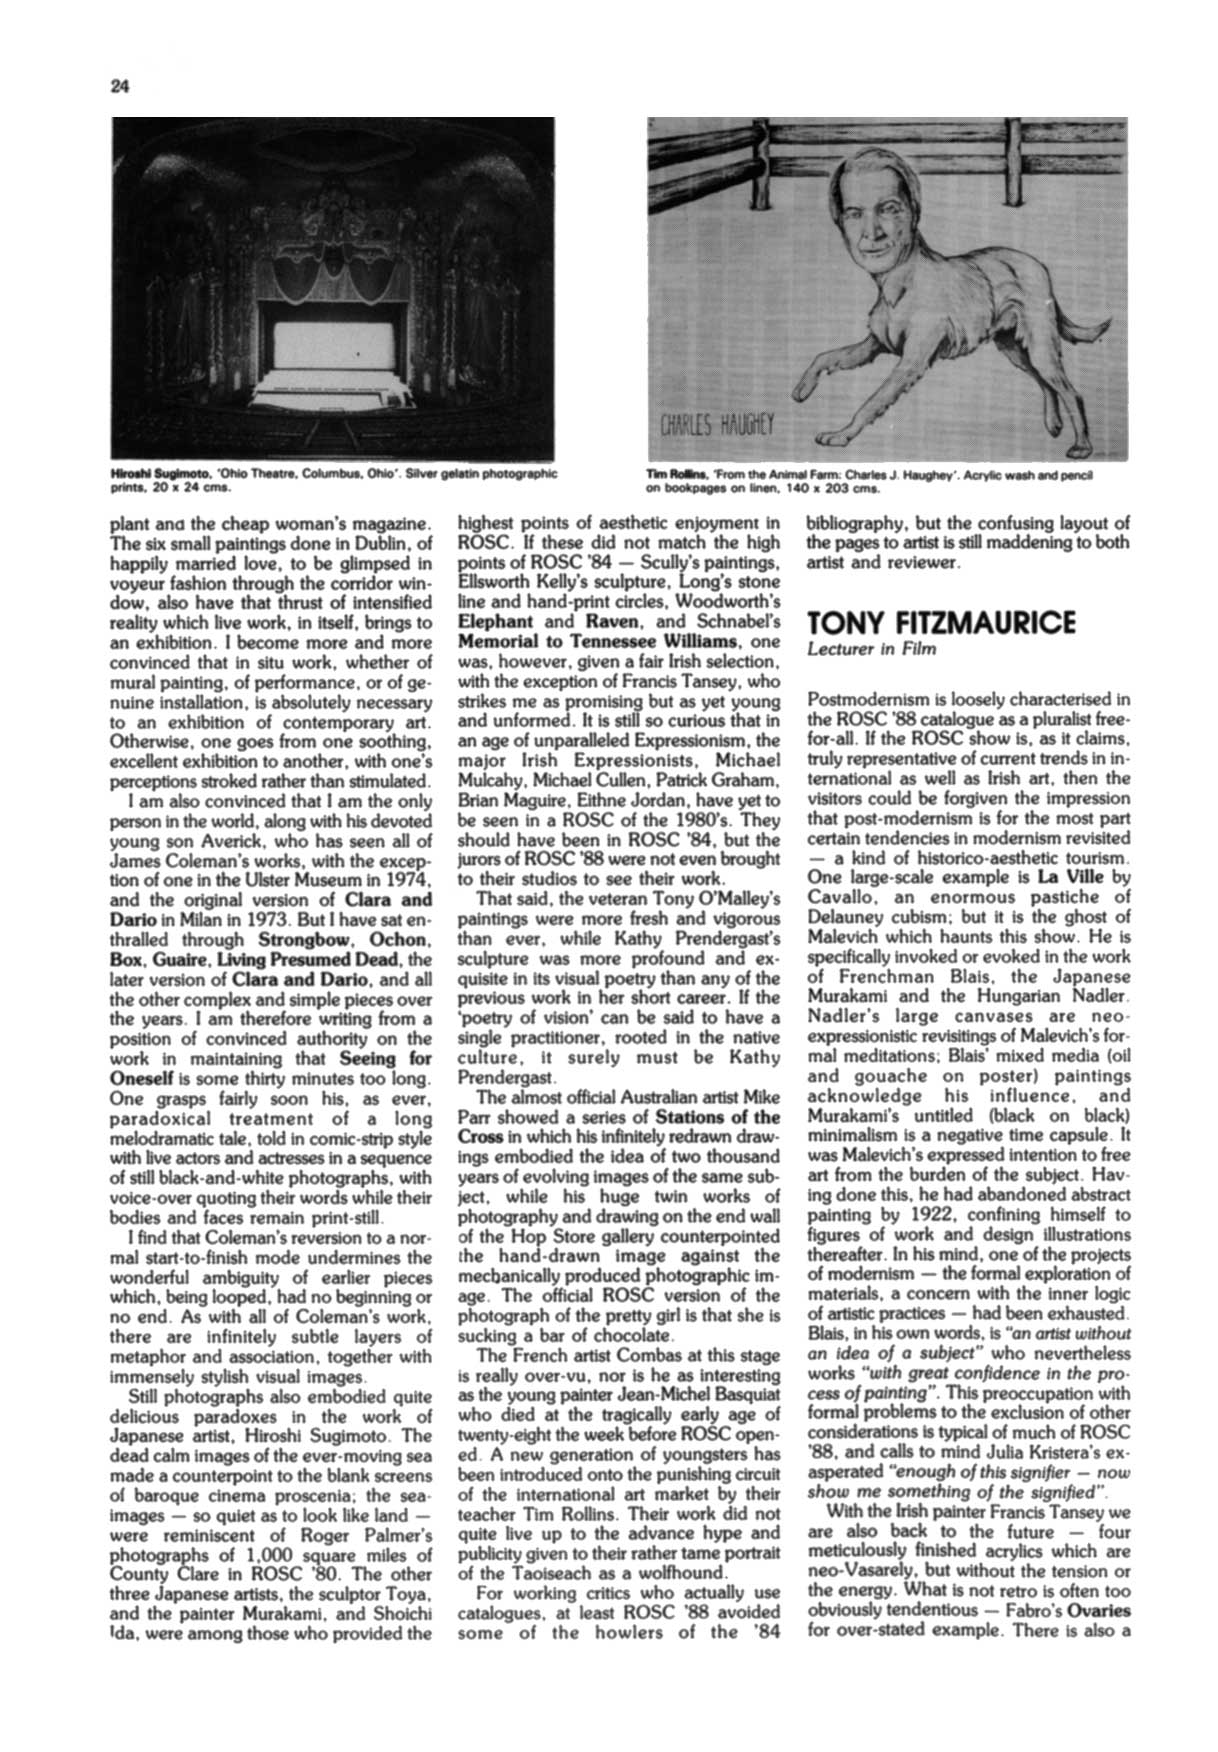 CIRCA Issue #42 – October/November 1988 [Page 24]